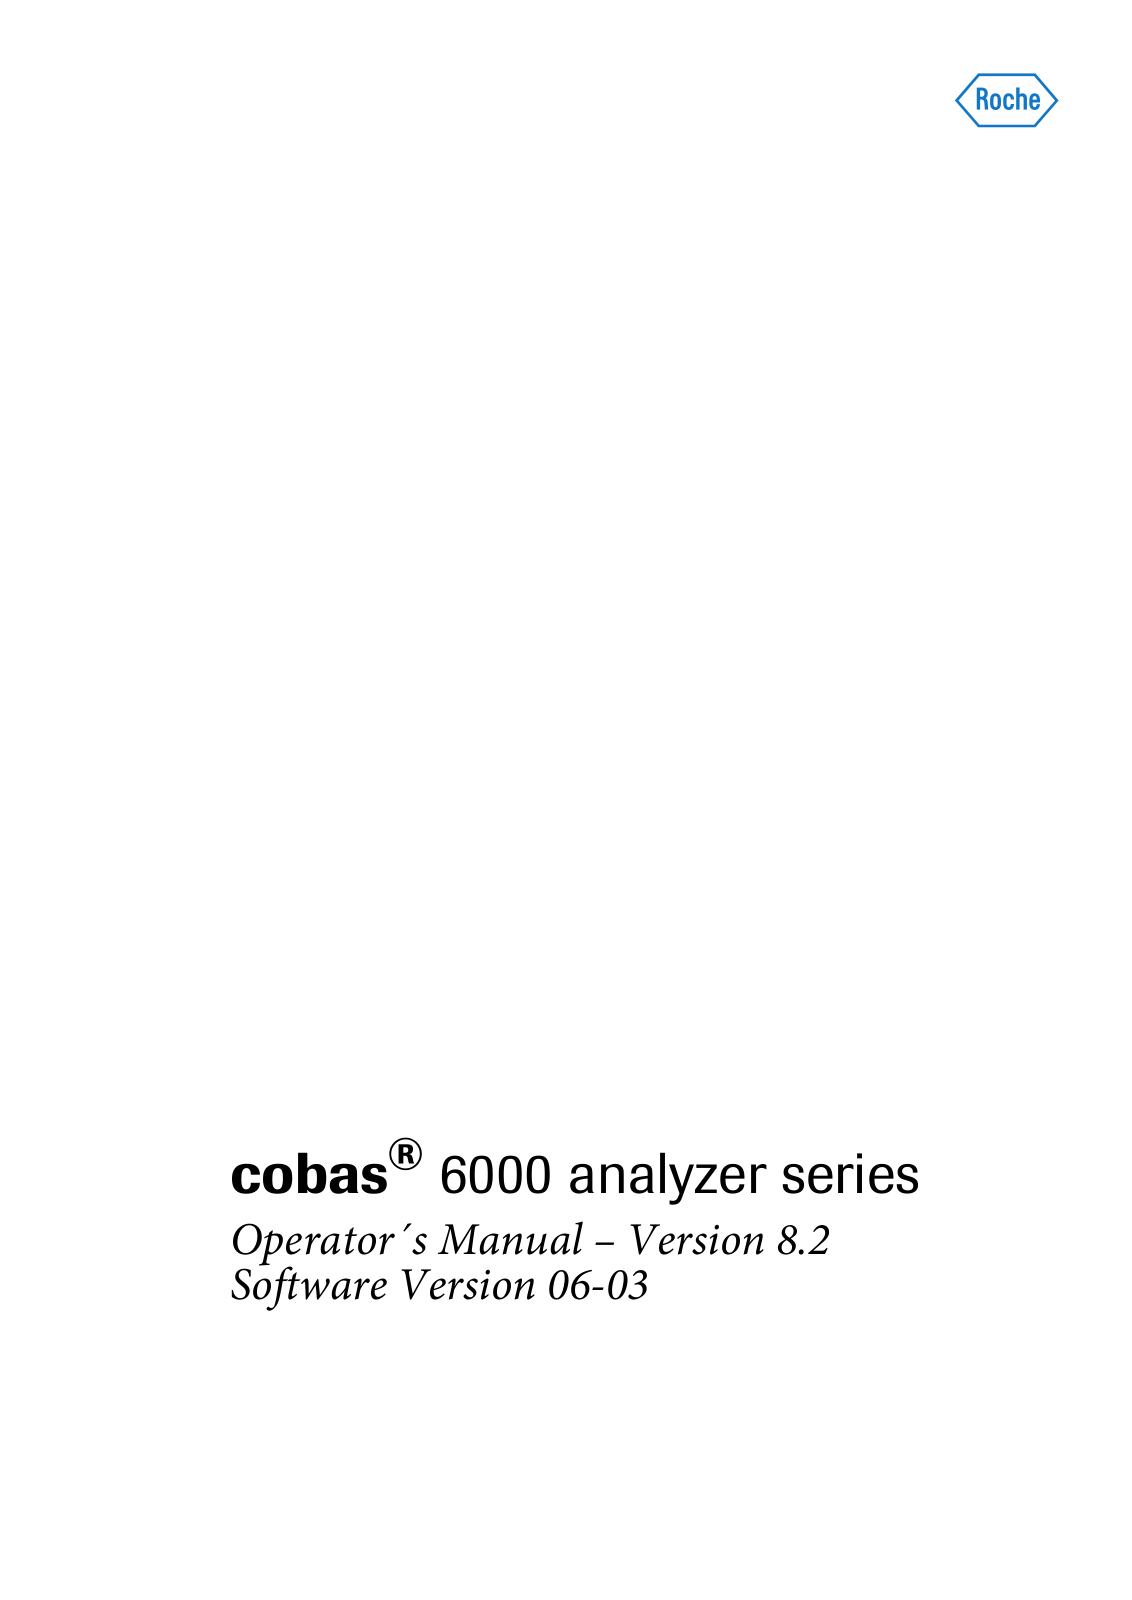 Roche cobas 6000 Operator’s Manual